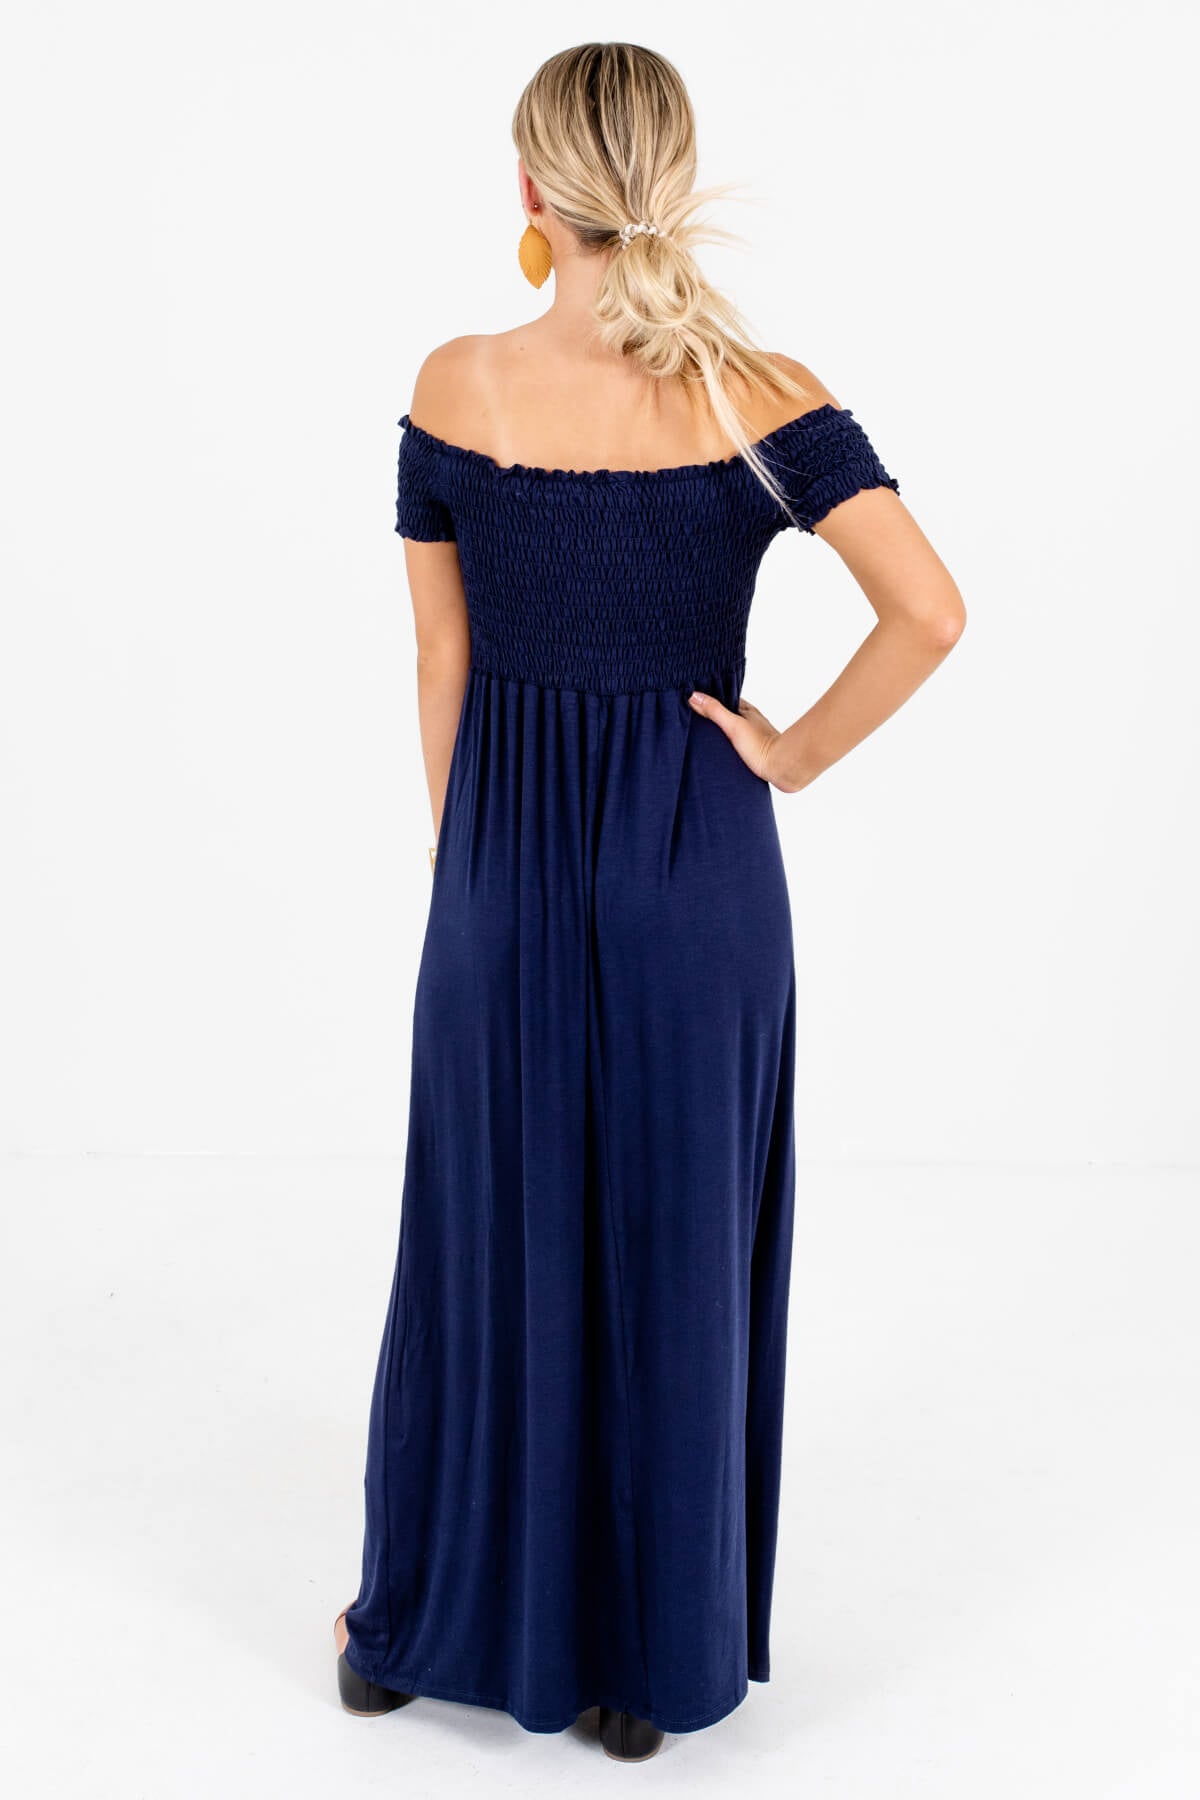 Women's Navy Blue Smocked Bodice Boutique Maxi Dress